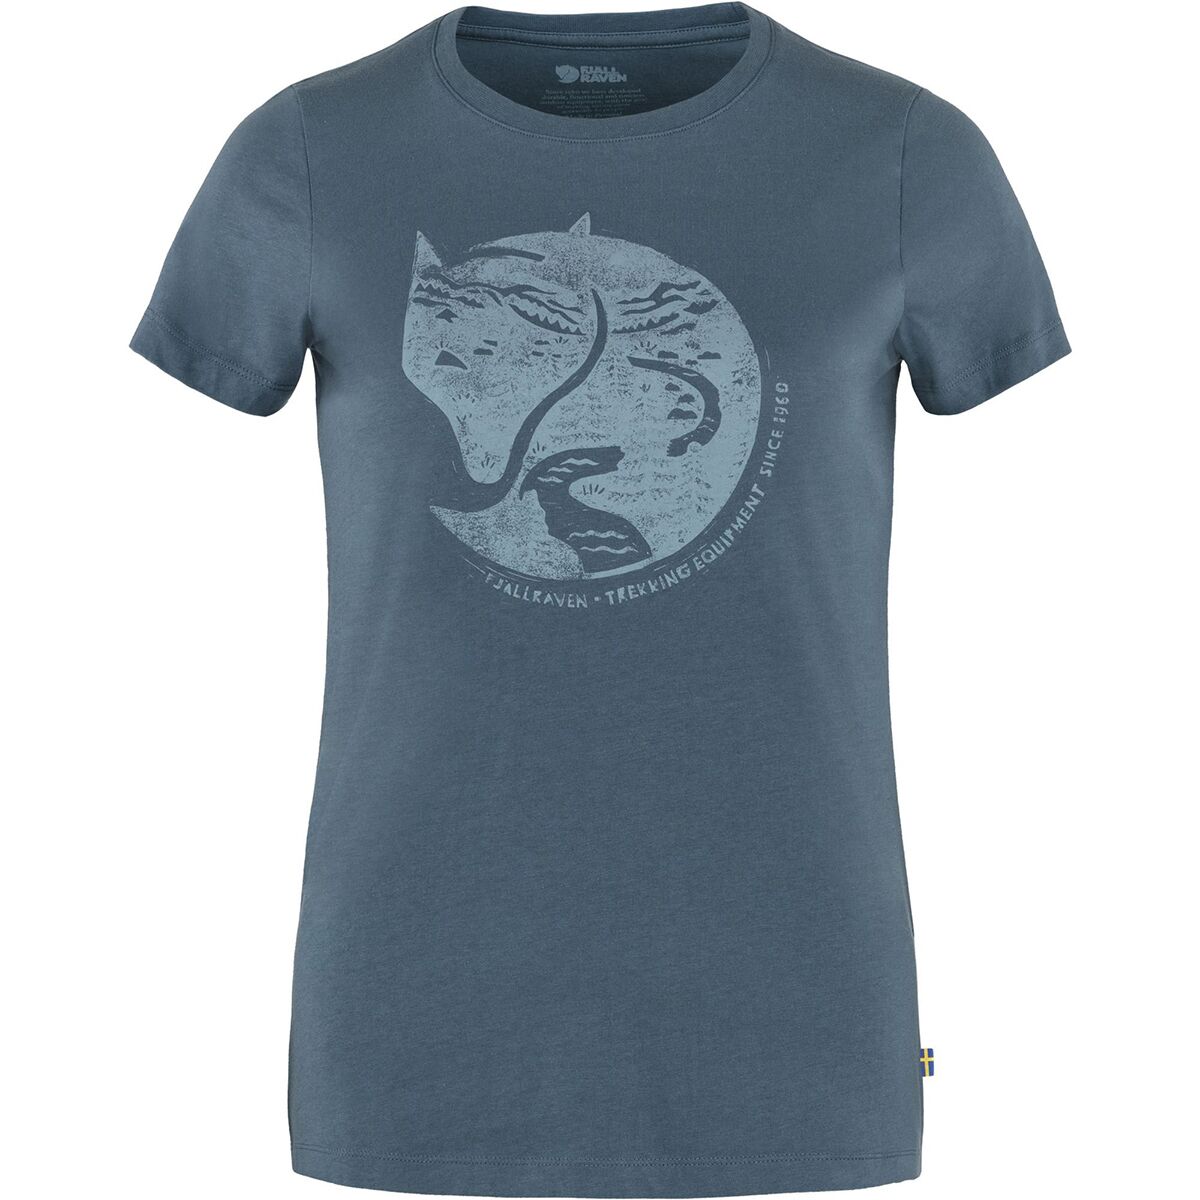 Fjallraven Arctic Fox Print T-Shirt - Women's